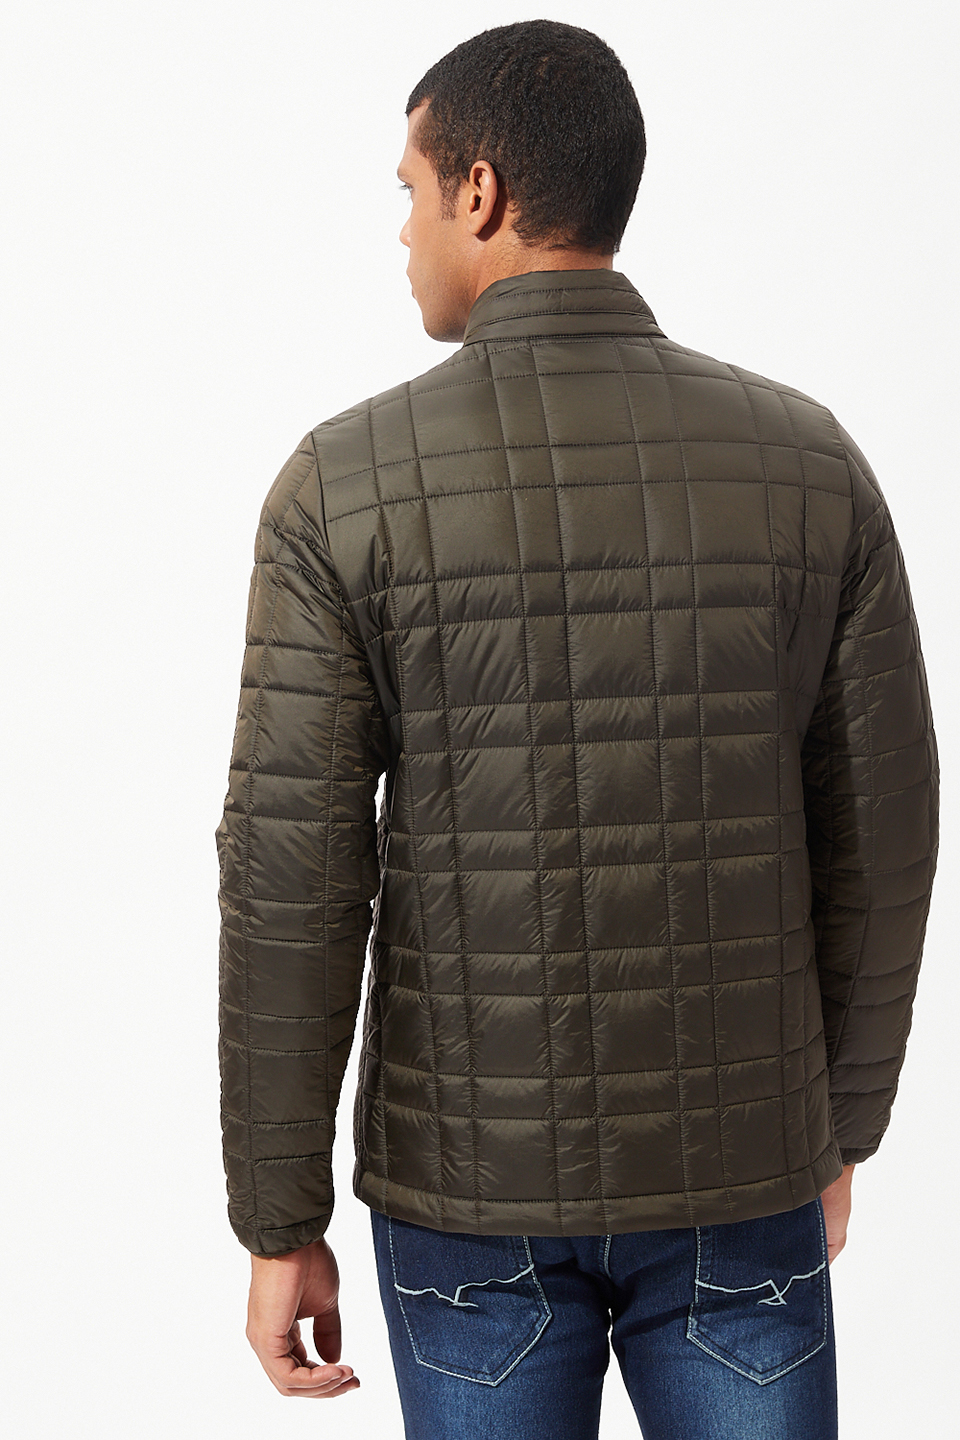 Full Sleeve Jacket – Fahrenheit